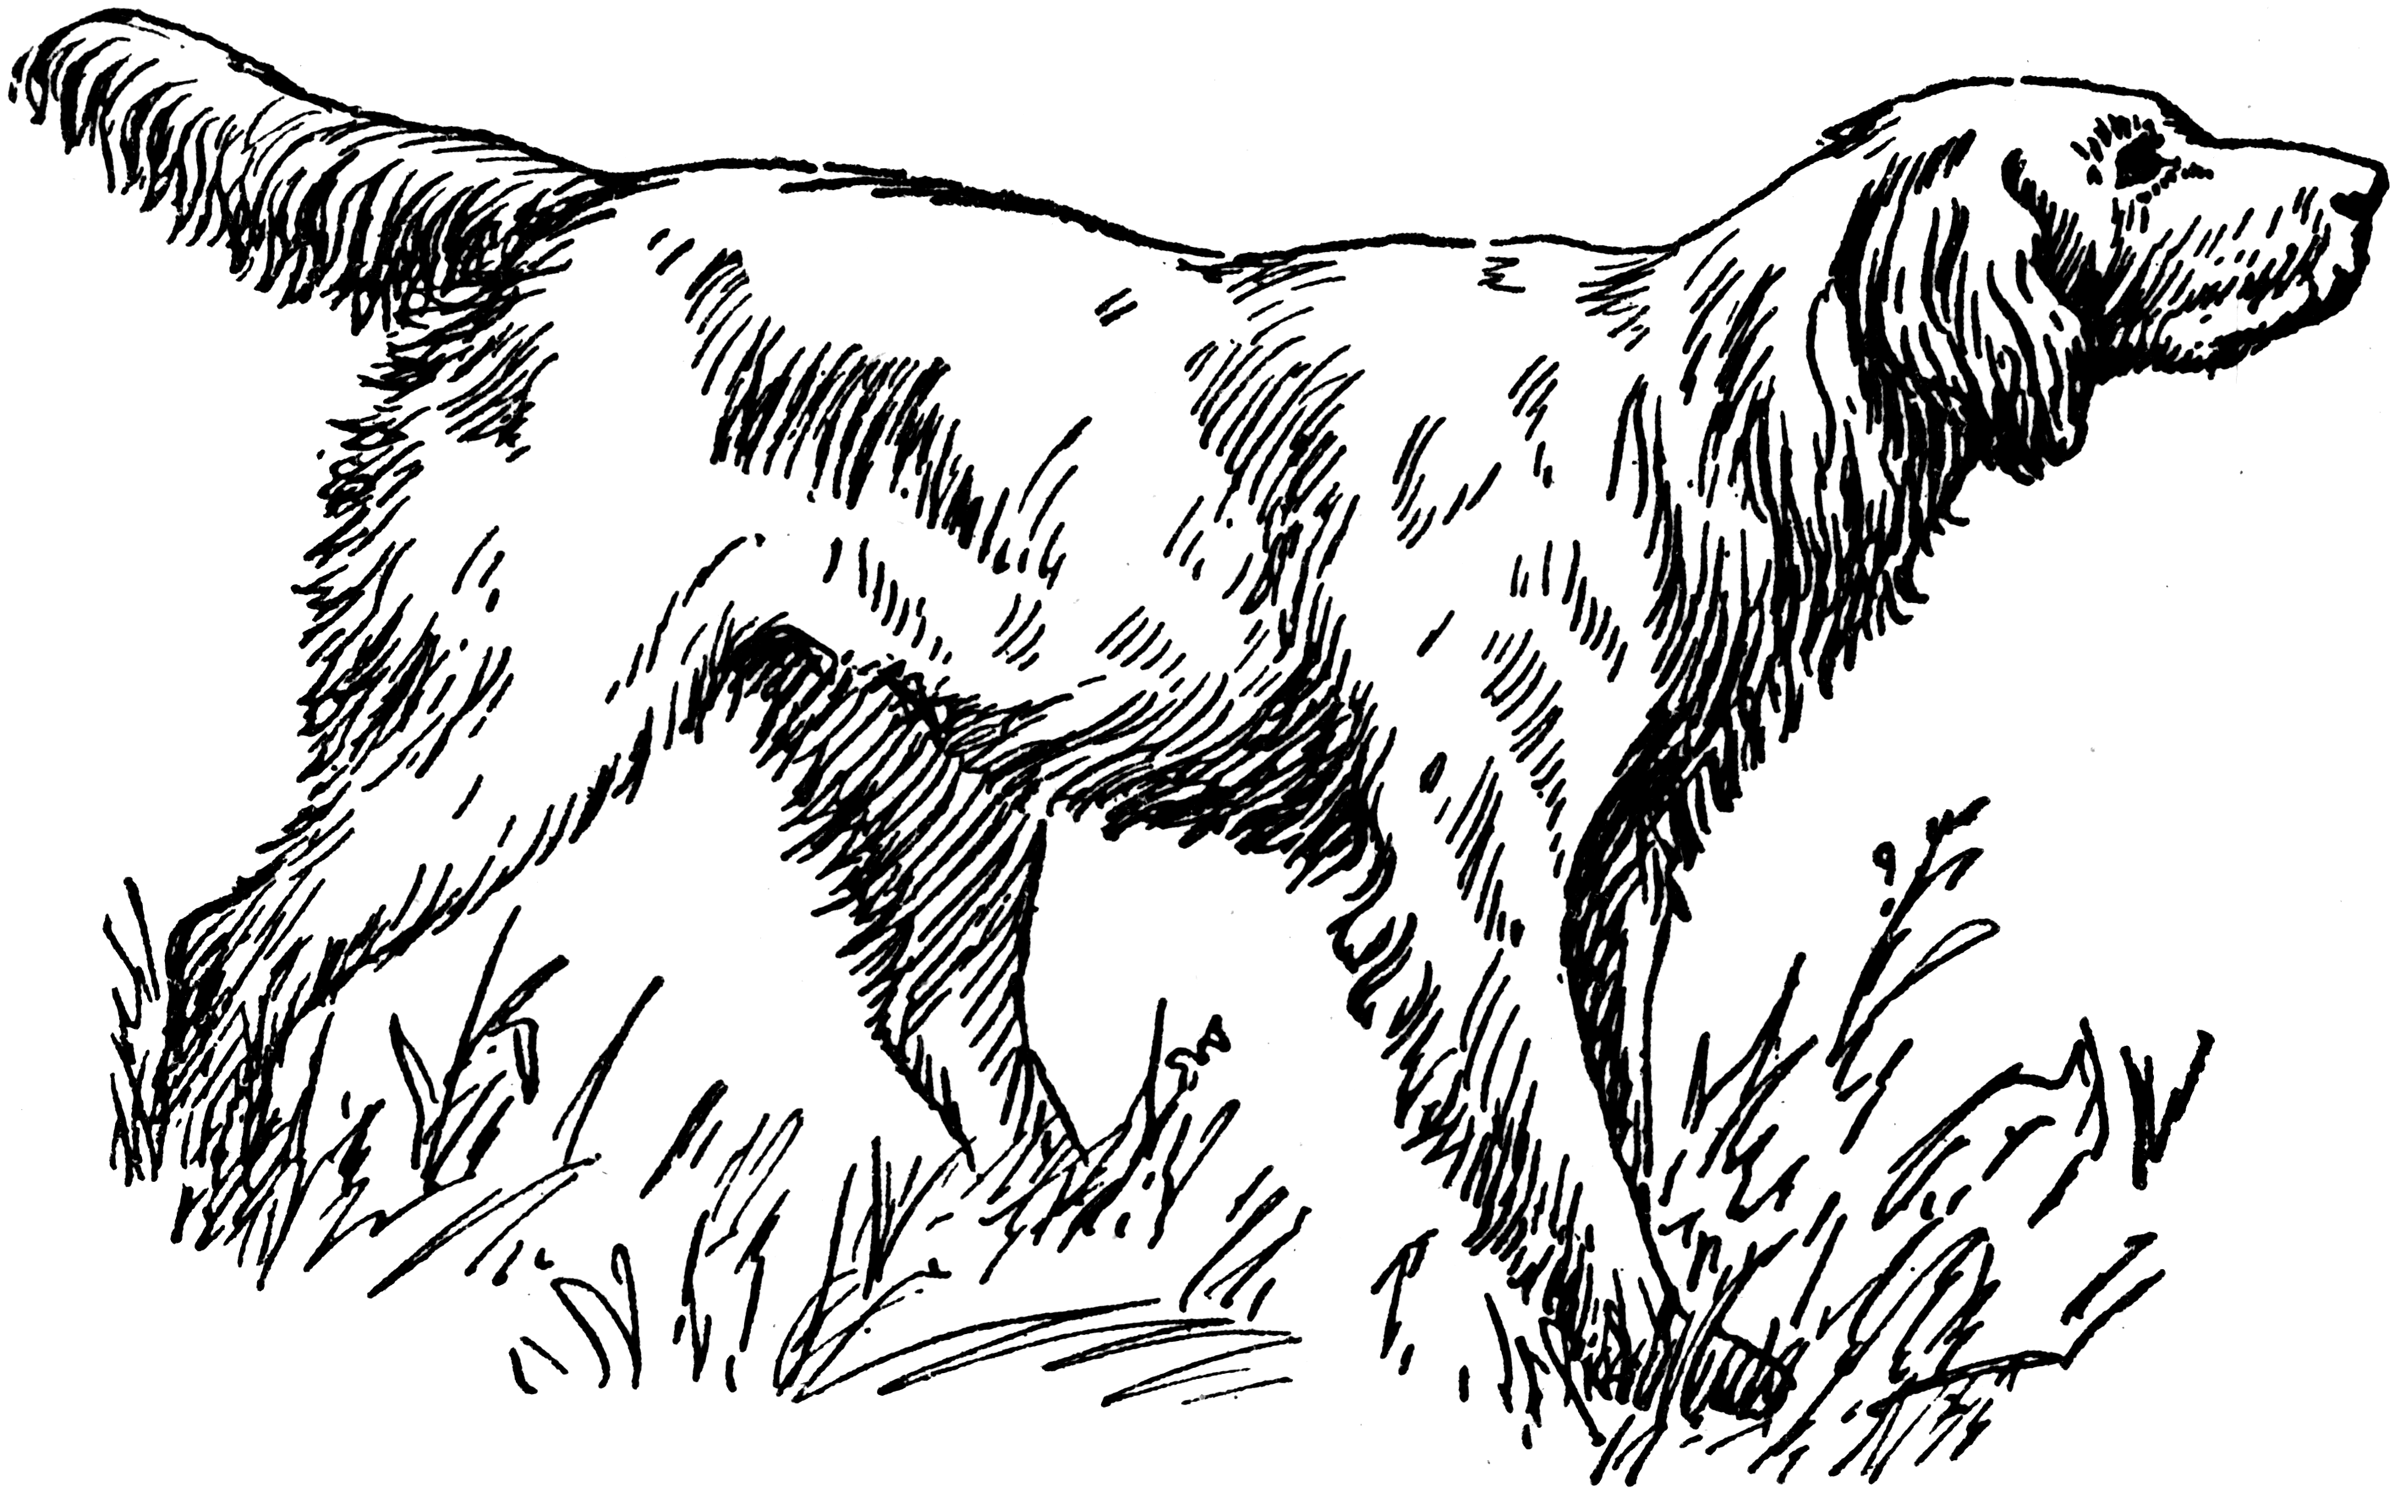 Раскраска охотничья собака